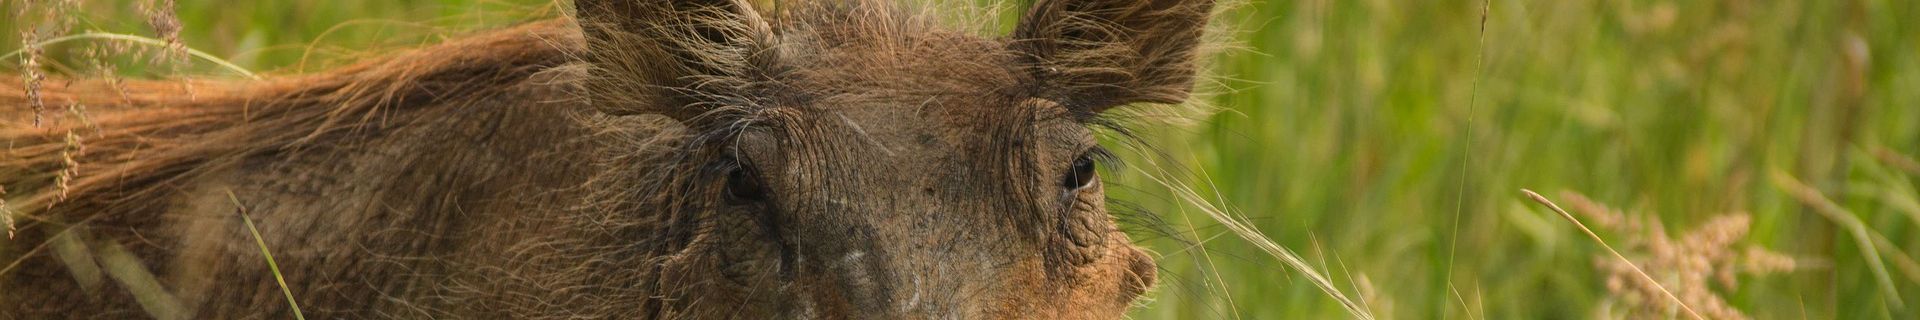 Common Warthog close up